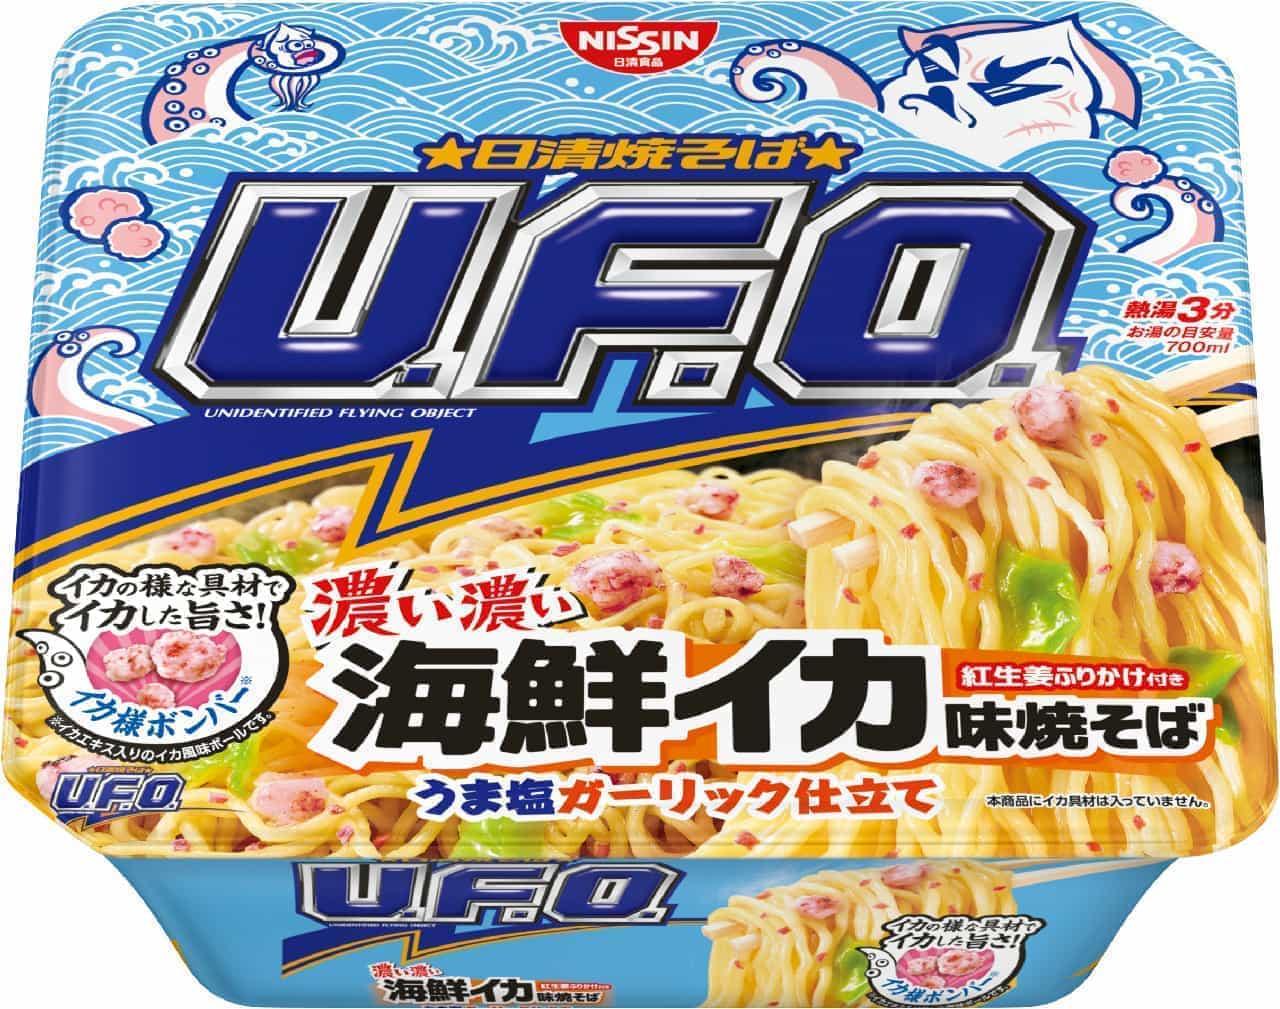 nissin-ufo-seafood-noodle